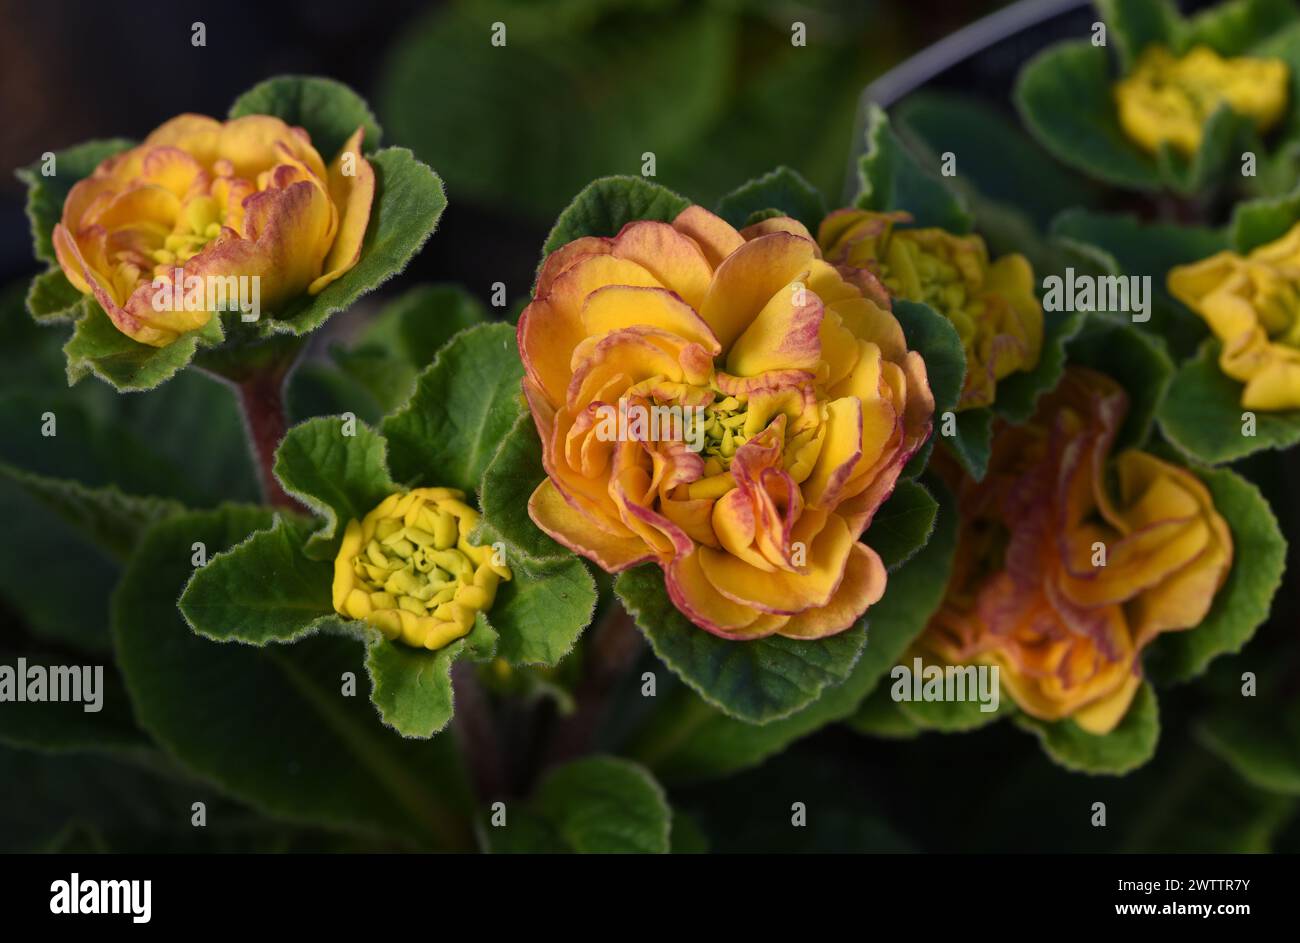 Double Primroses or Double Primula Belarina flowers Stock Photo